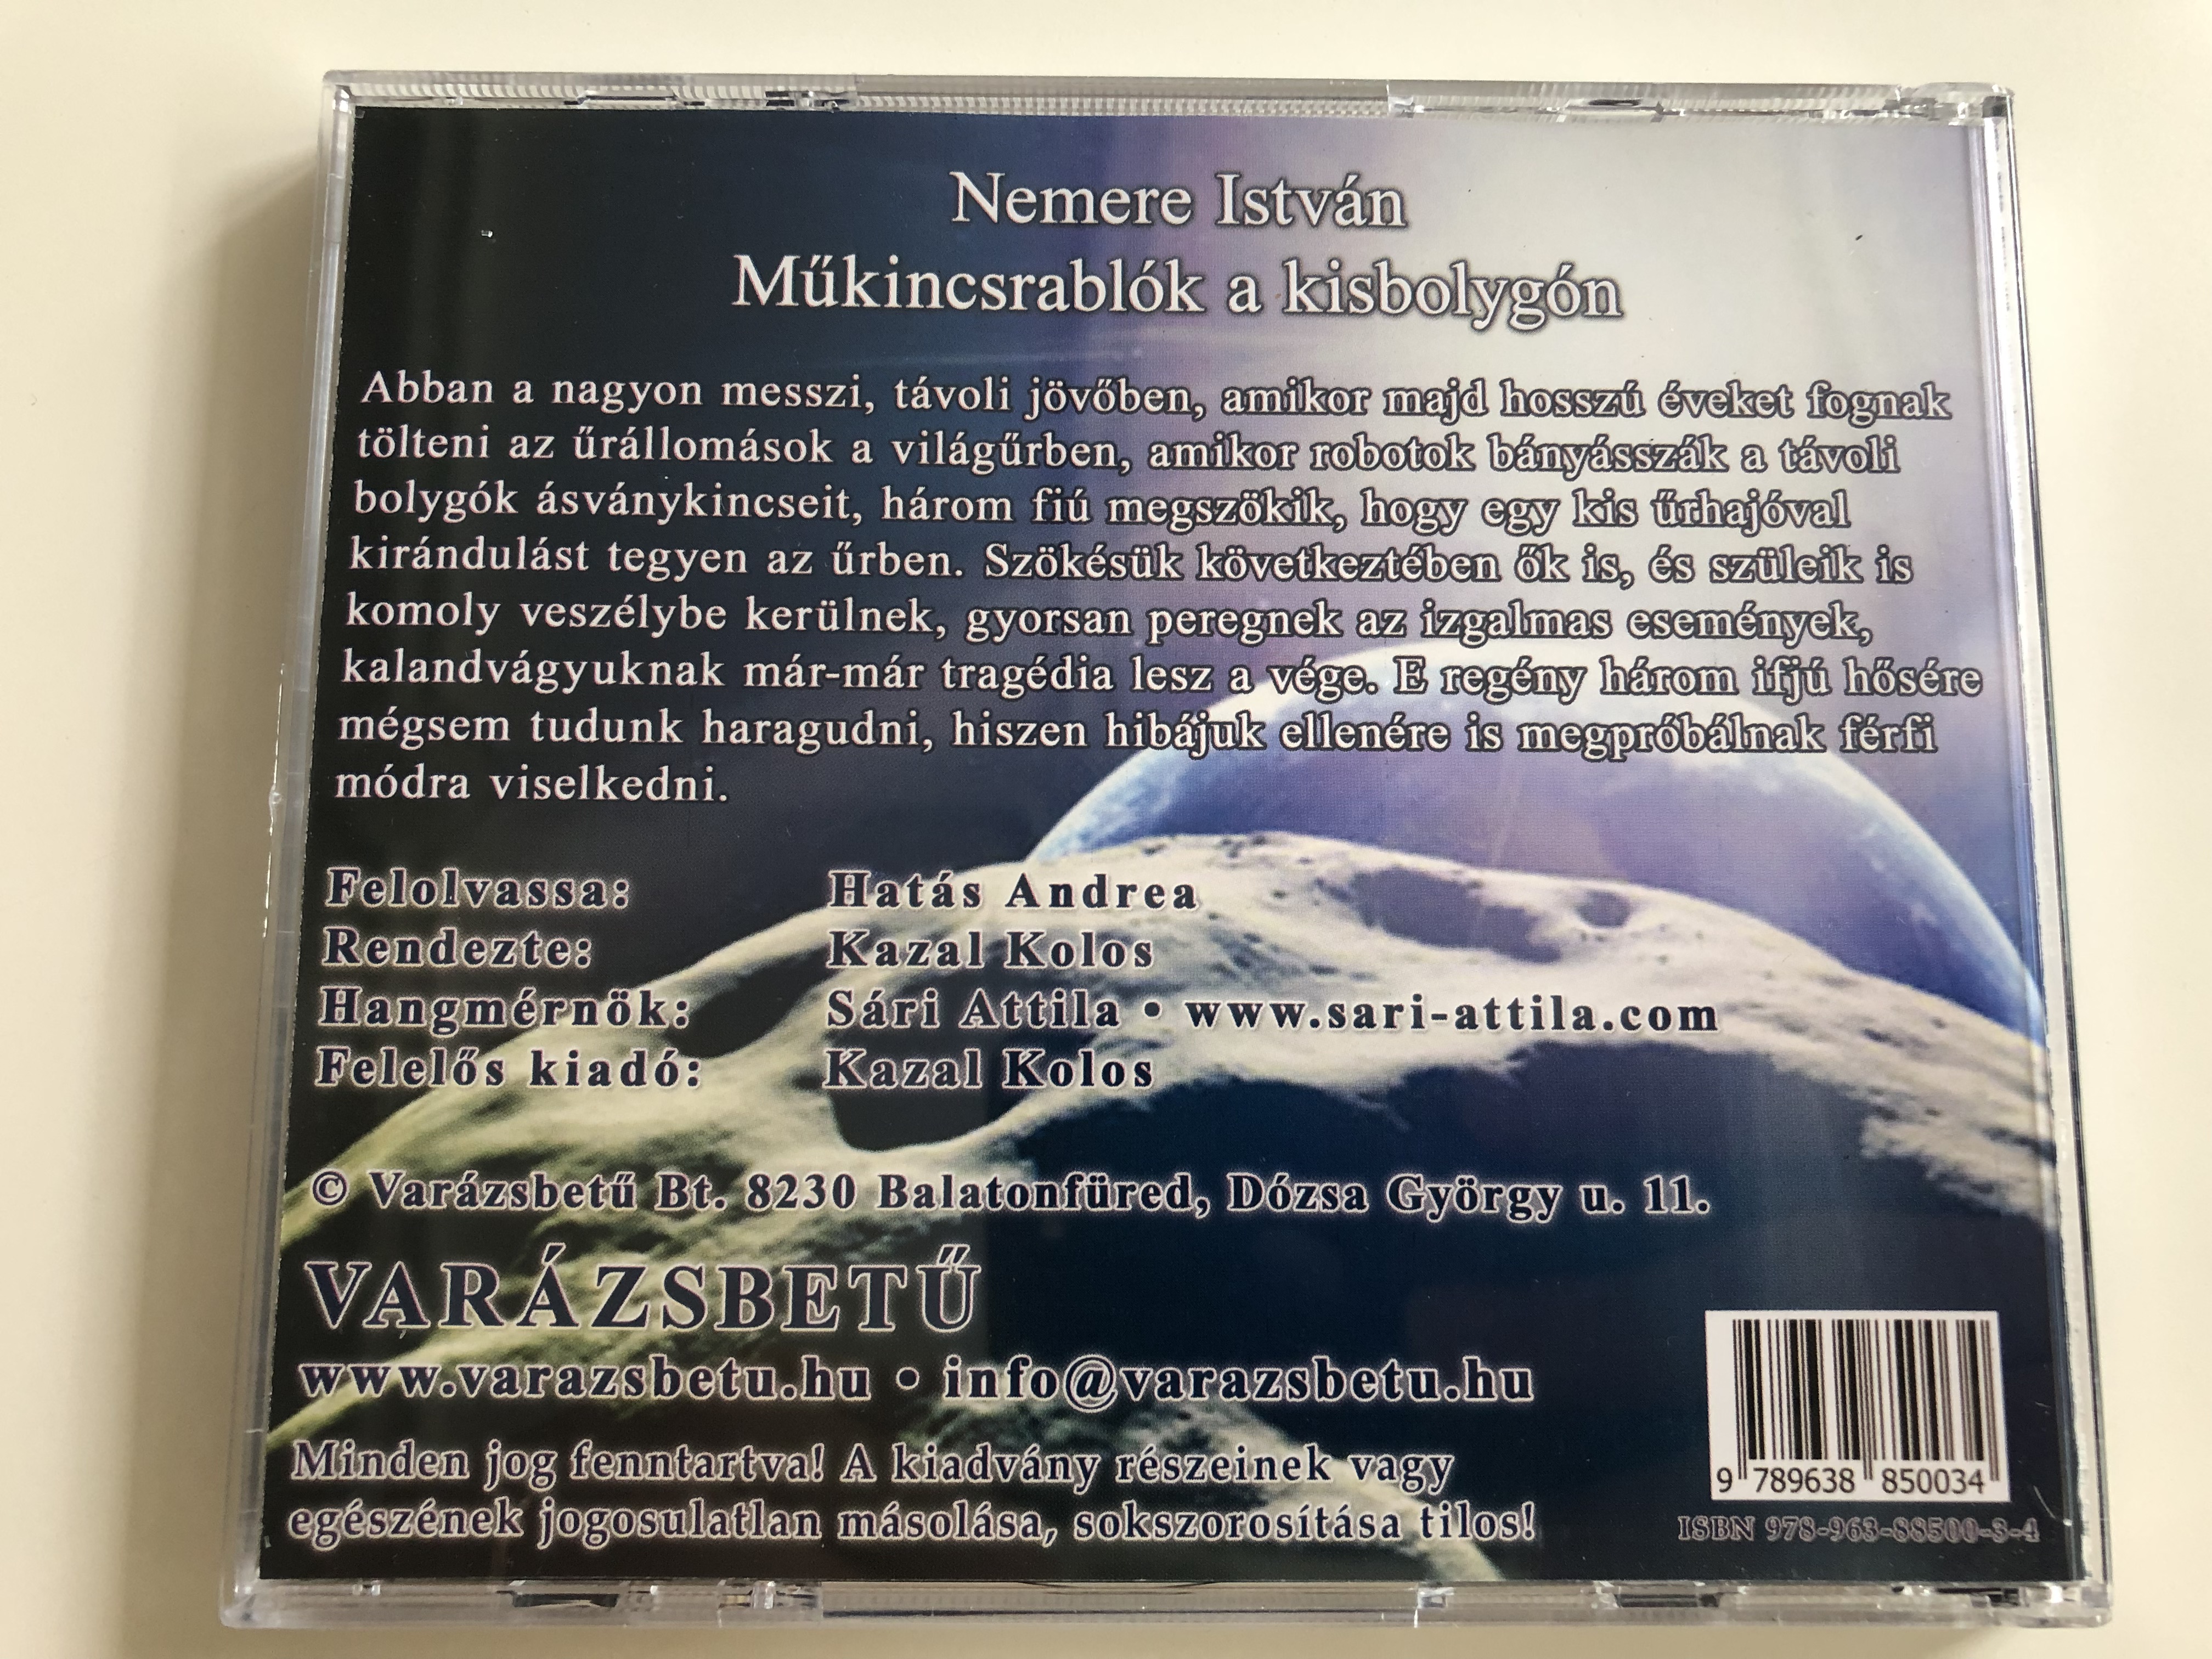 m-kincsrabl-k-a-kisbolyg-n-by-nemere-istv-n-teljes-sz-veg-hungarian-language-audio-book-read-by-hat-s-andrea-directed-by-kazal-kolos-var-zsbet-hangosk-nyv-mp3-cd-5-.jpg